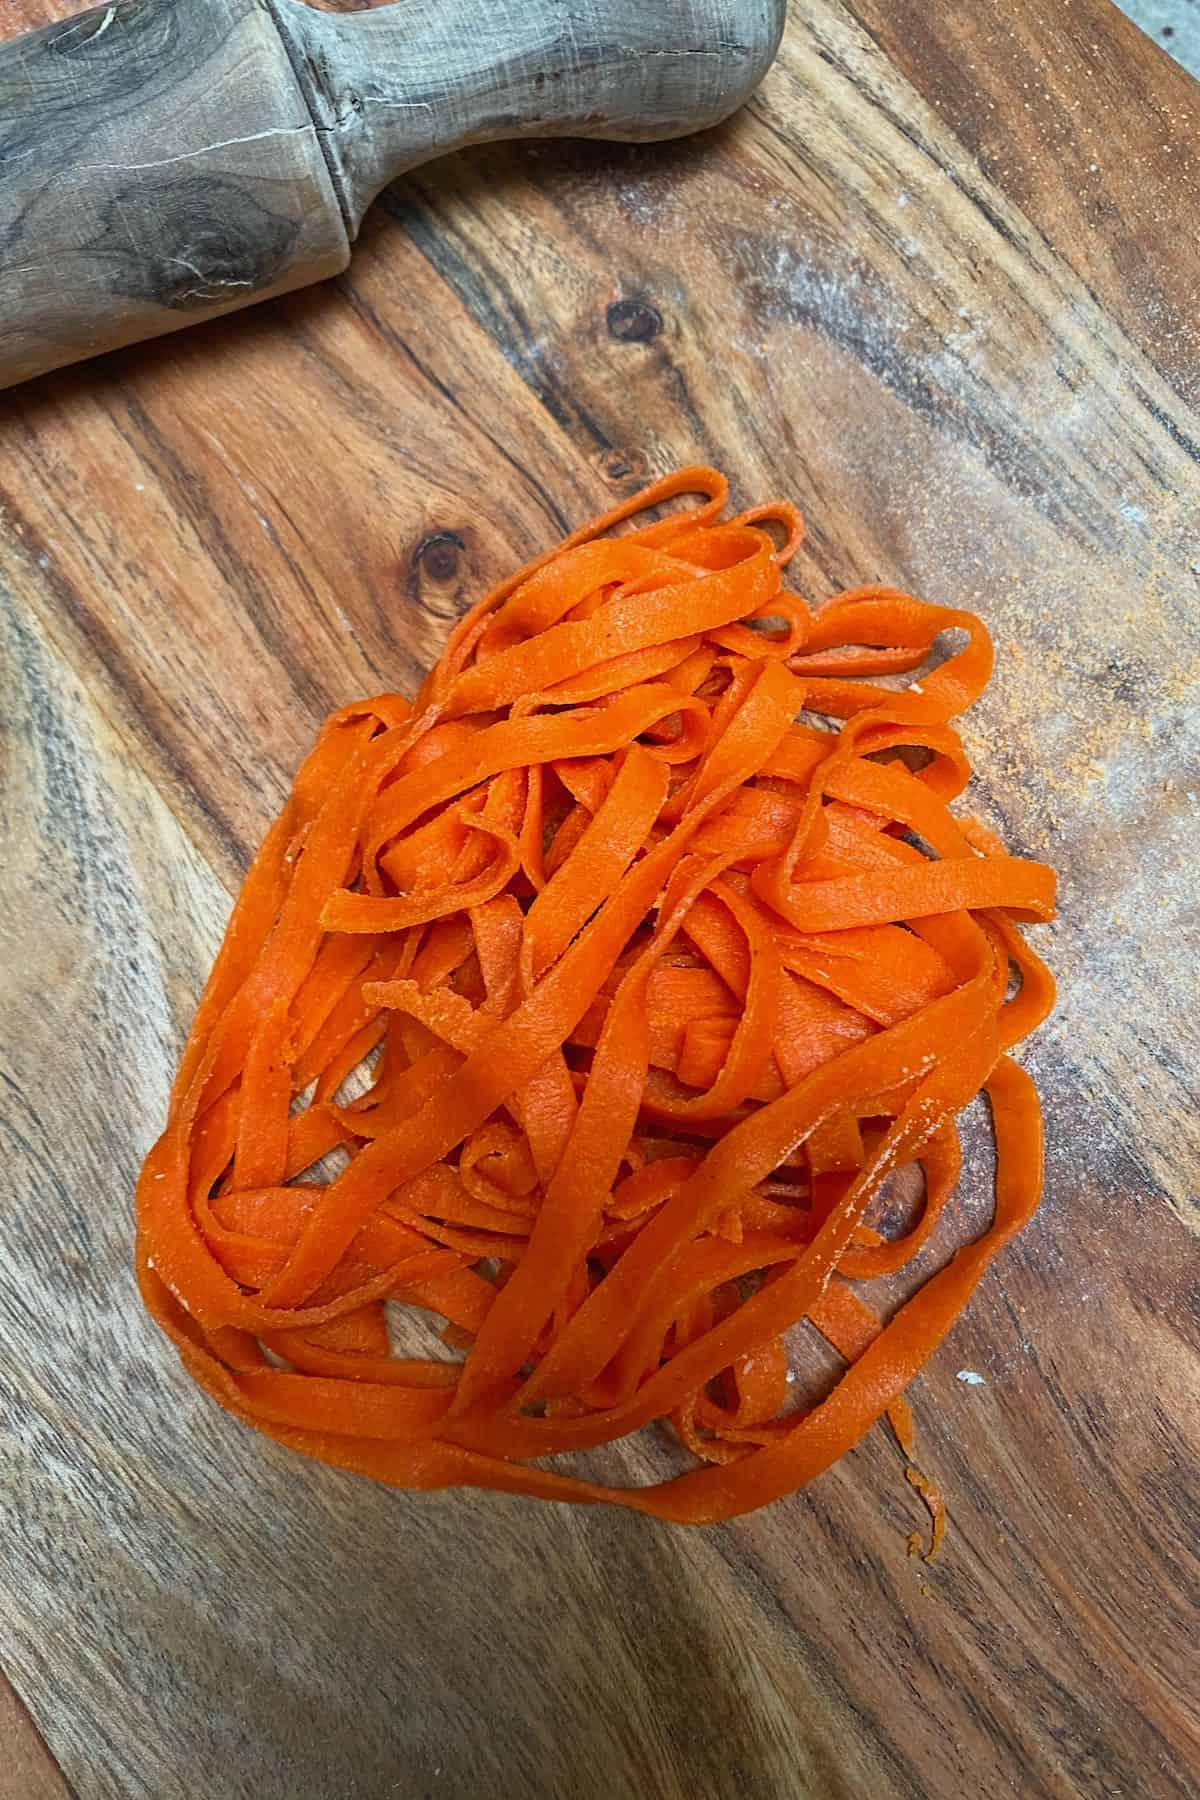 Red lentil pasta tagliatelle